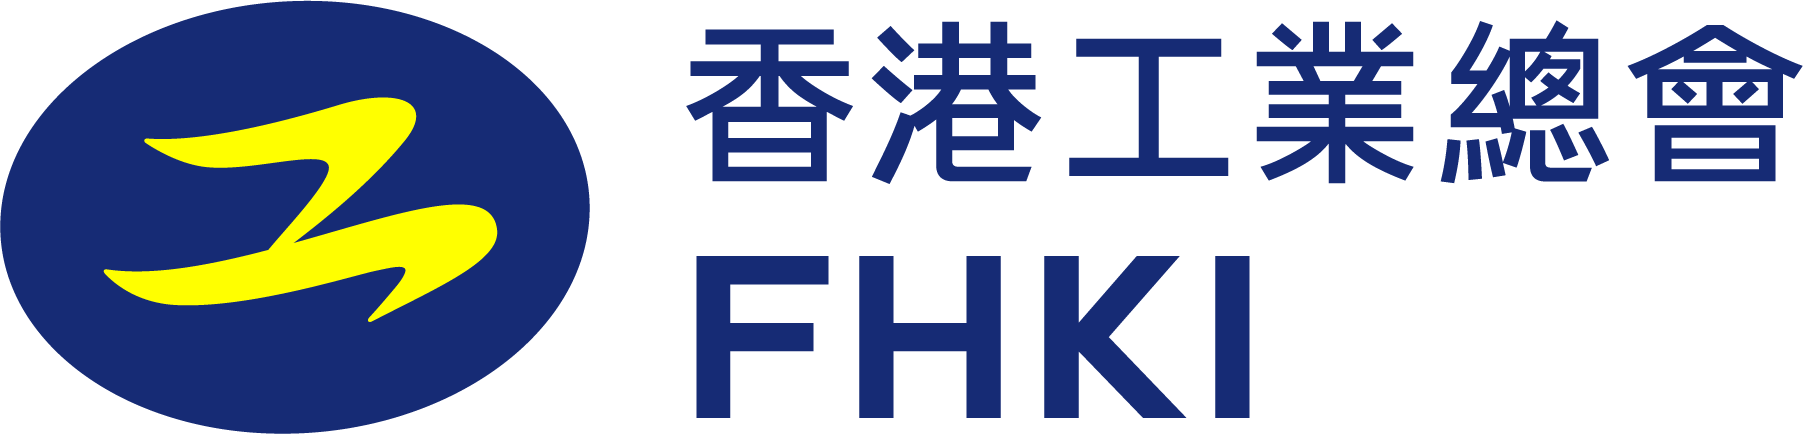 FHKI Short Logo